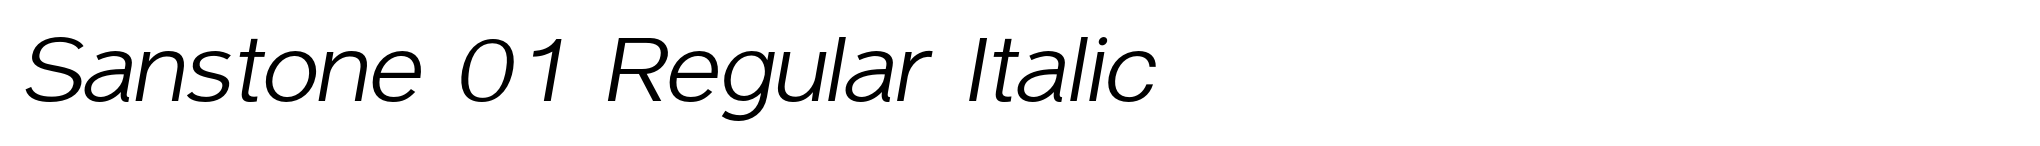 Sanstone 01 Regular Italic image